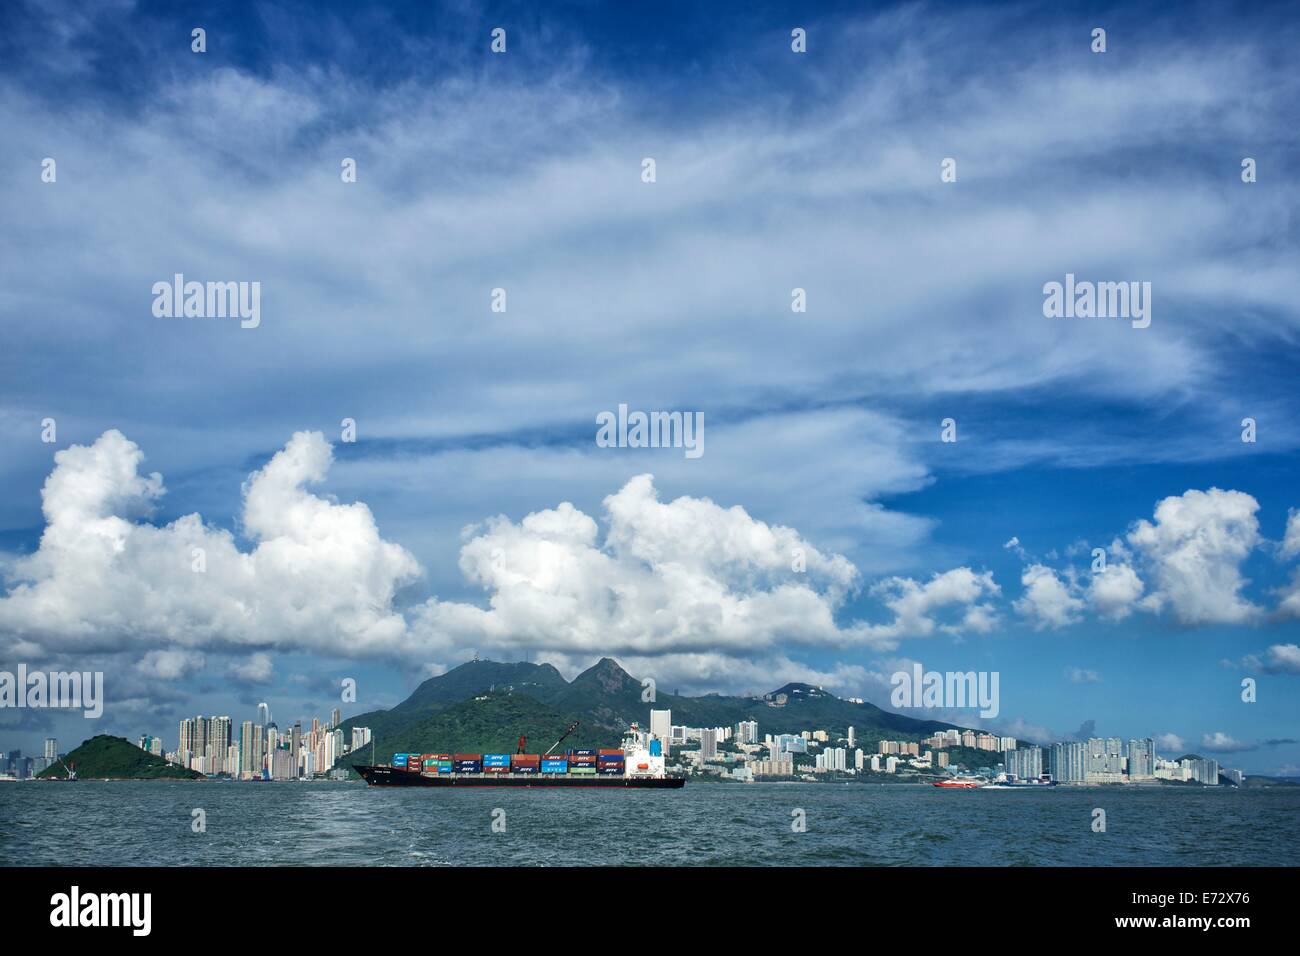 L'île de Hong Kong skyline vue de la mer Banque D'Images